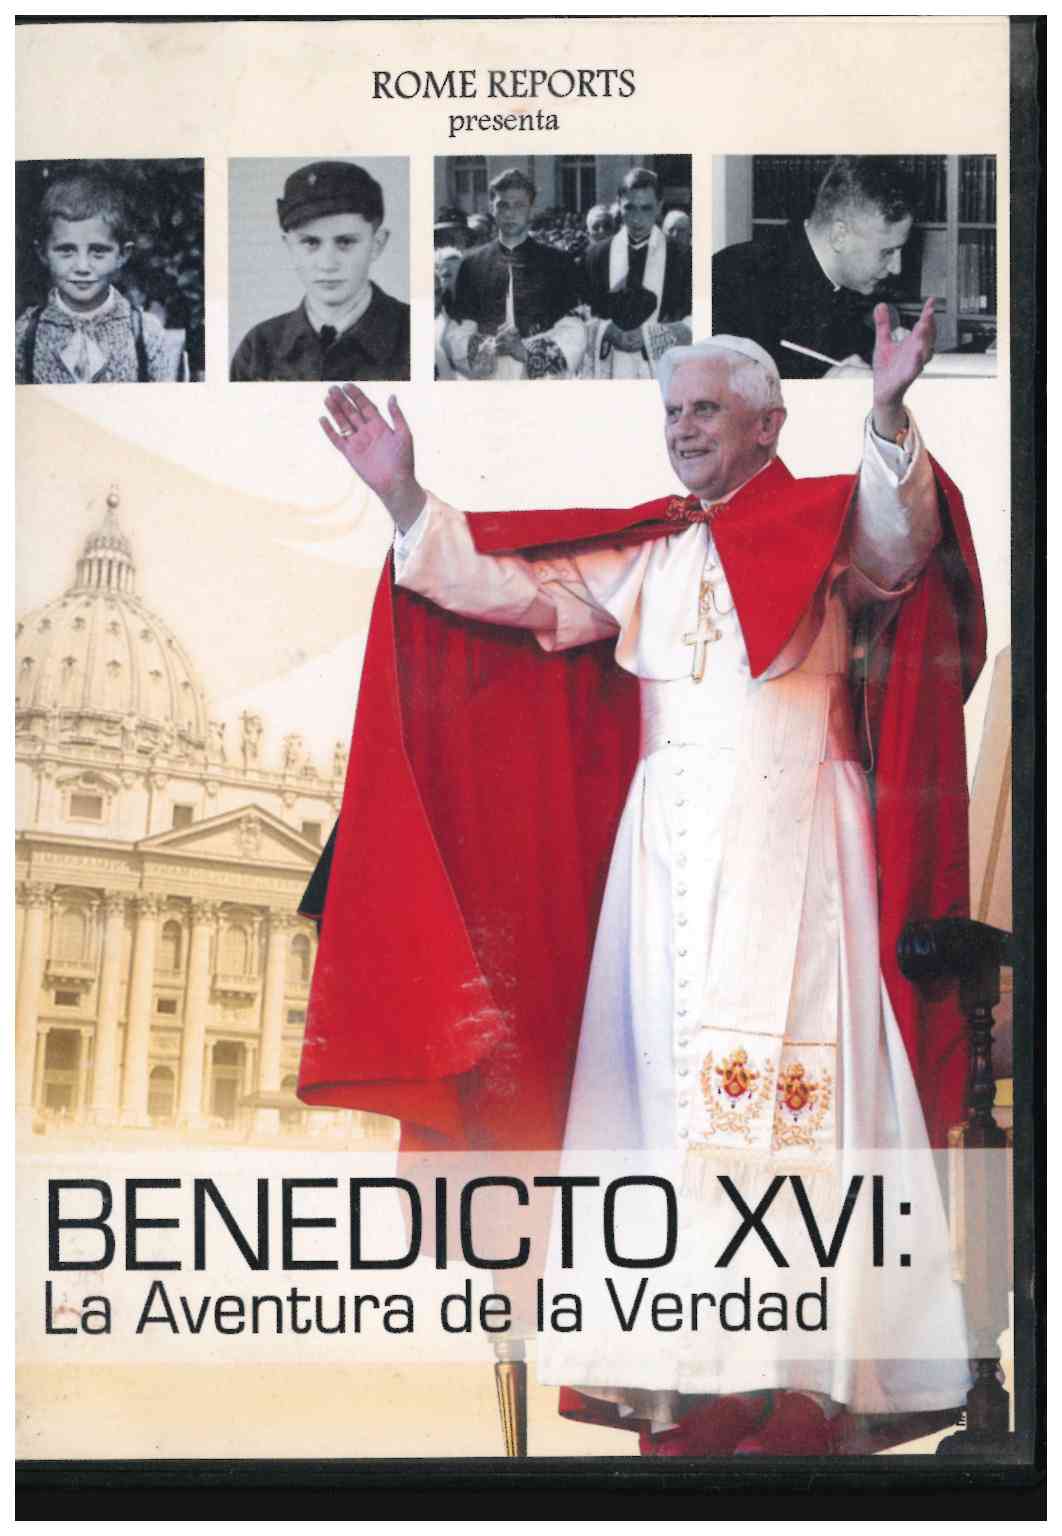 Benedicto XVI: La aventura de la verdad. Rome Reports 2009